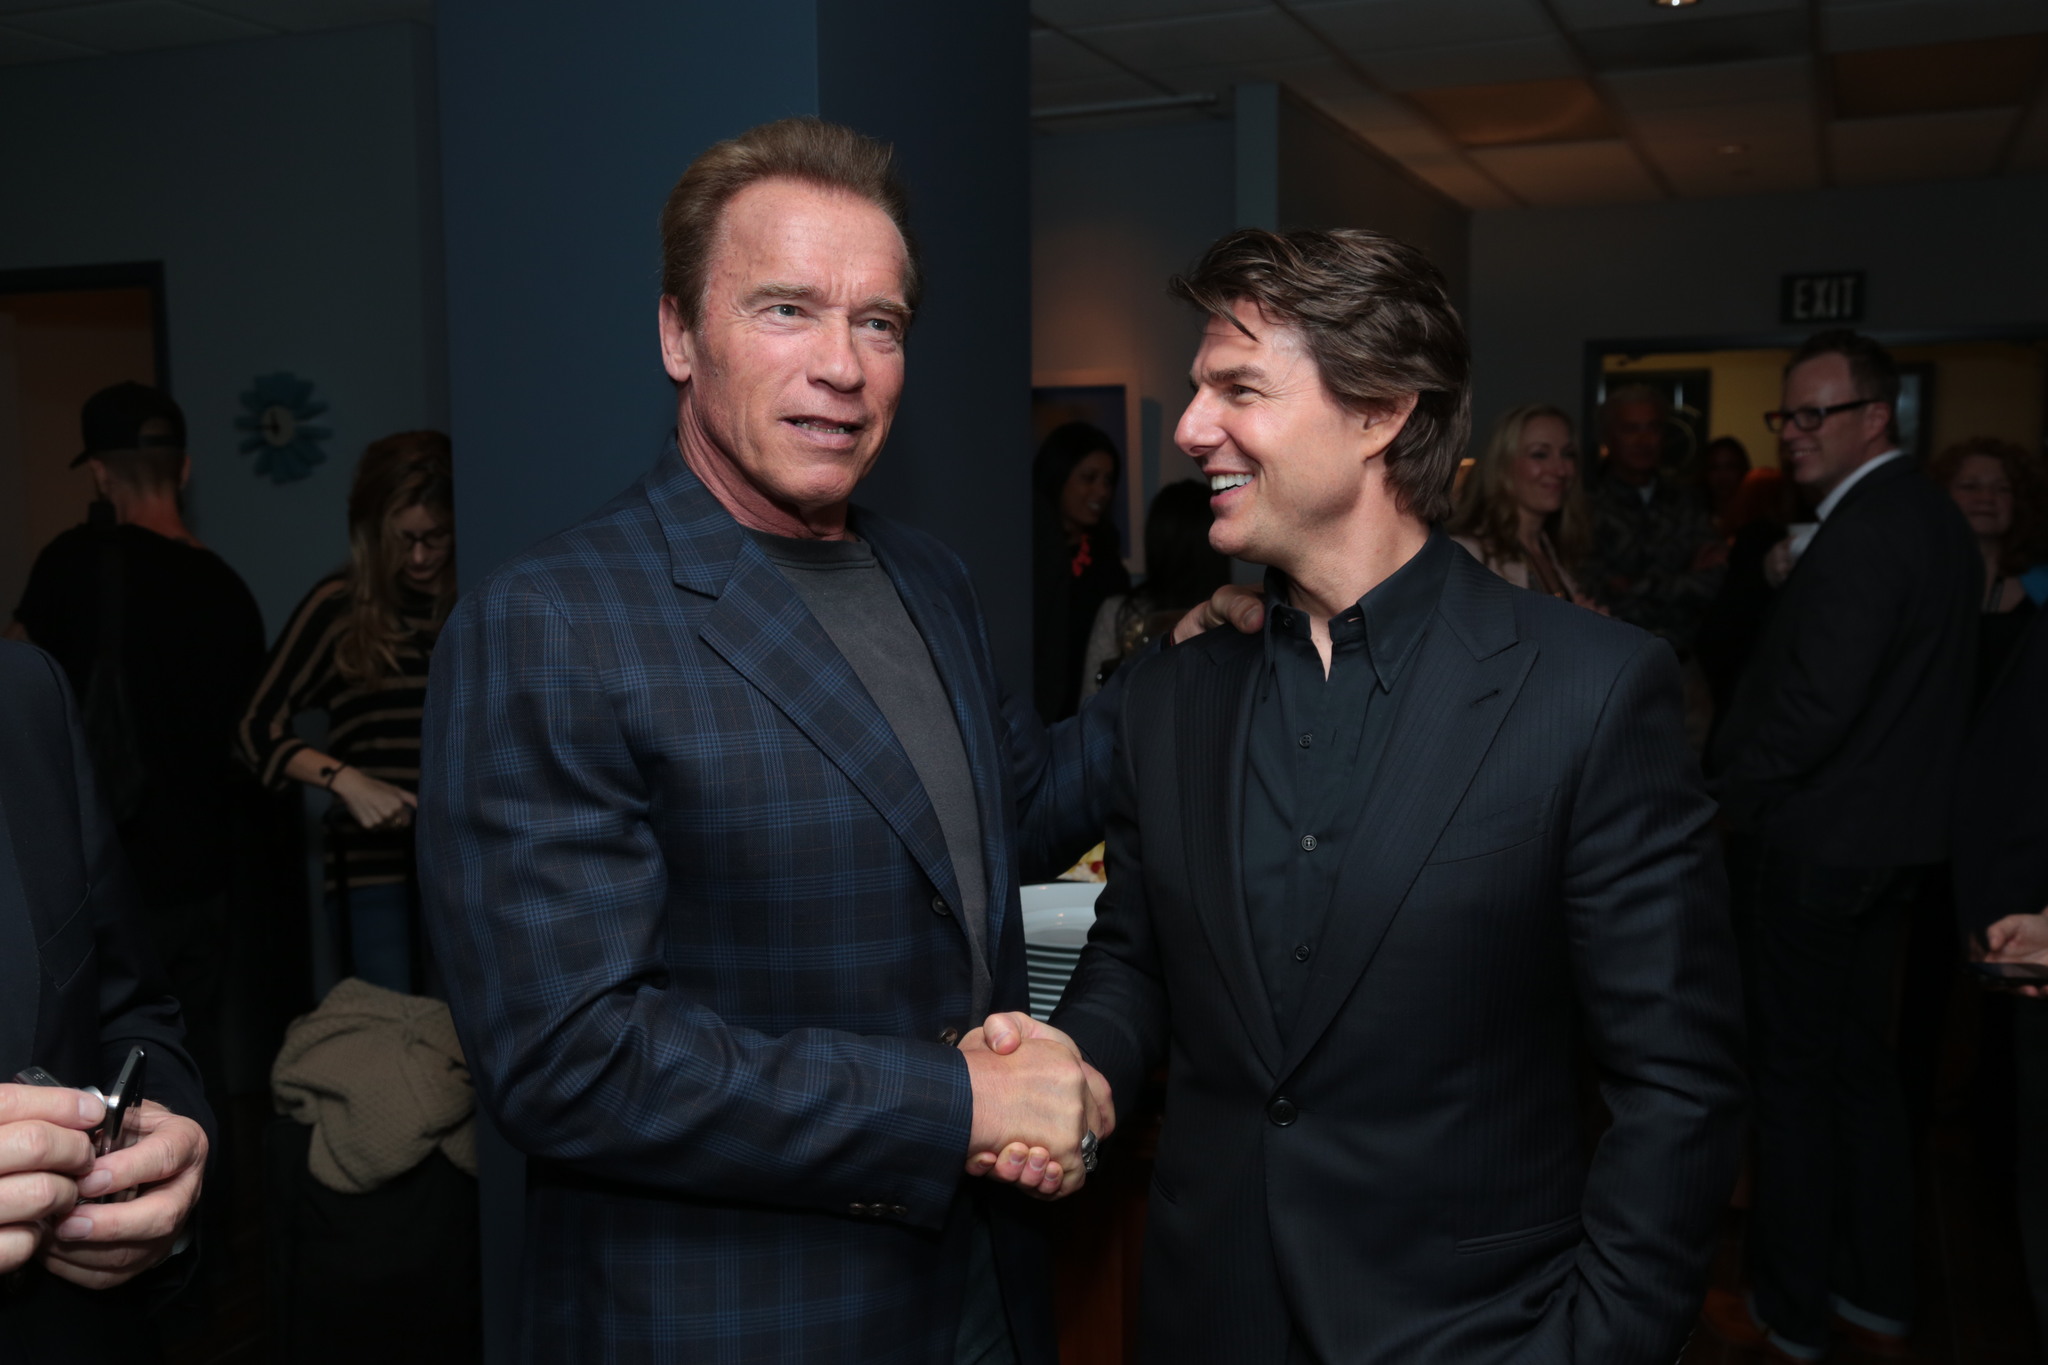 Tom Cruise and Arnold Schwarzenegger